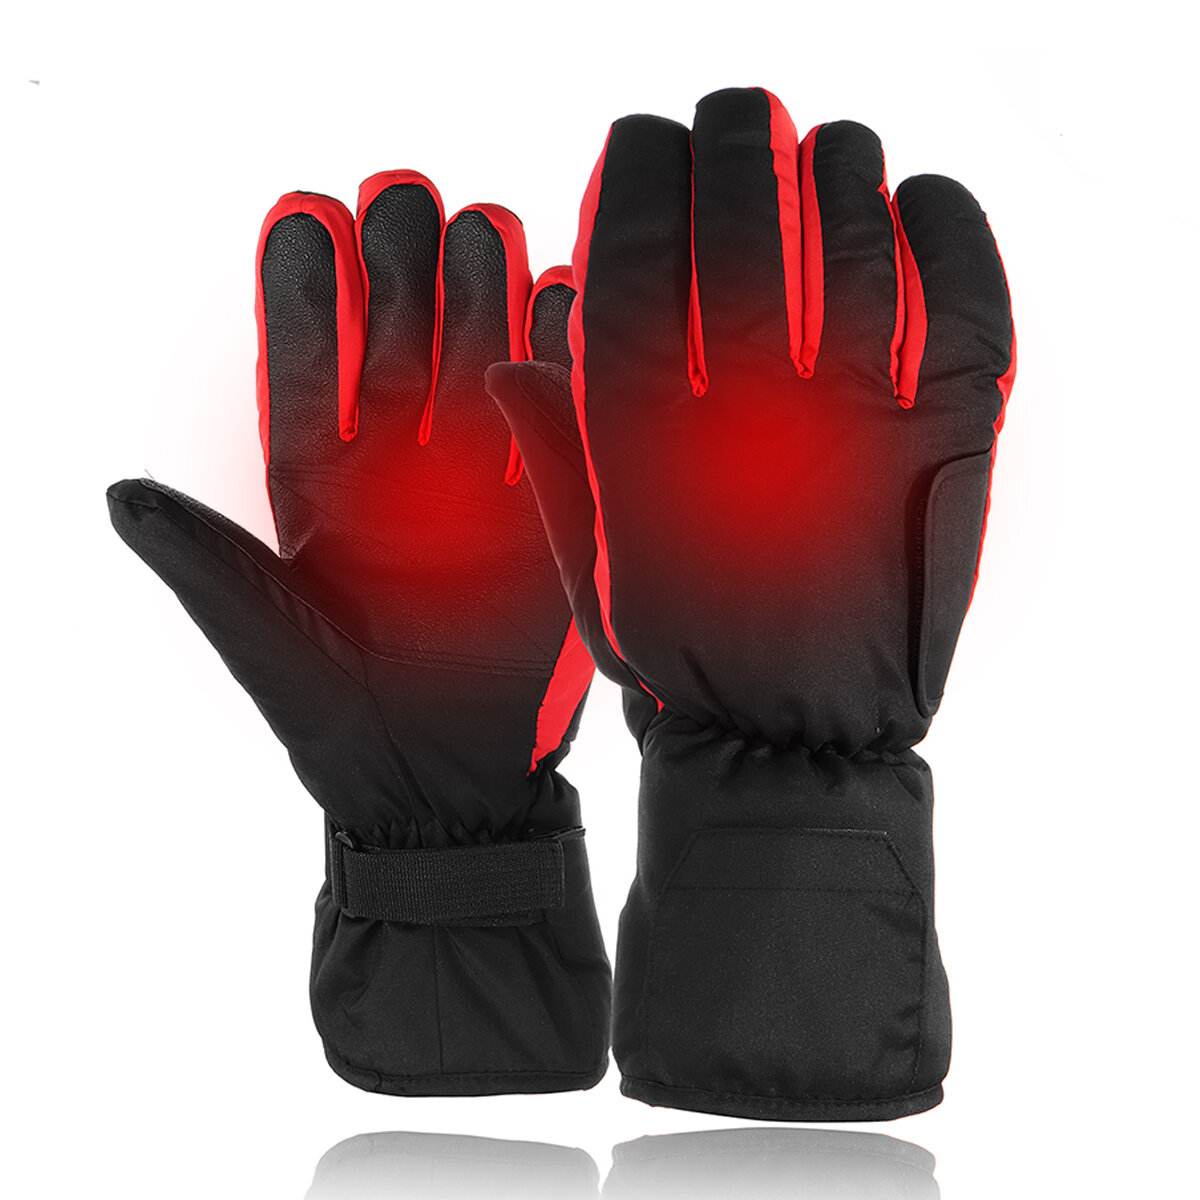 

Electric Heated Gloves Hands Warm Winter Warmer Waterproof Black Red Motorcycle